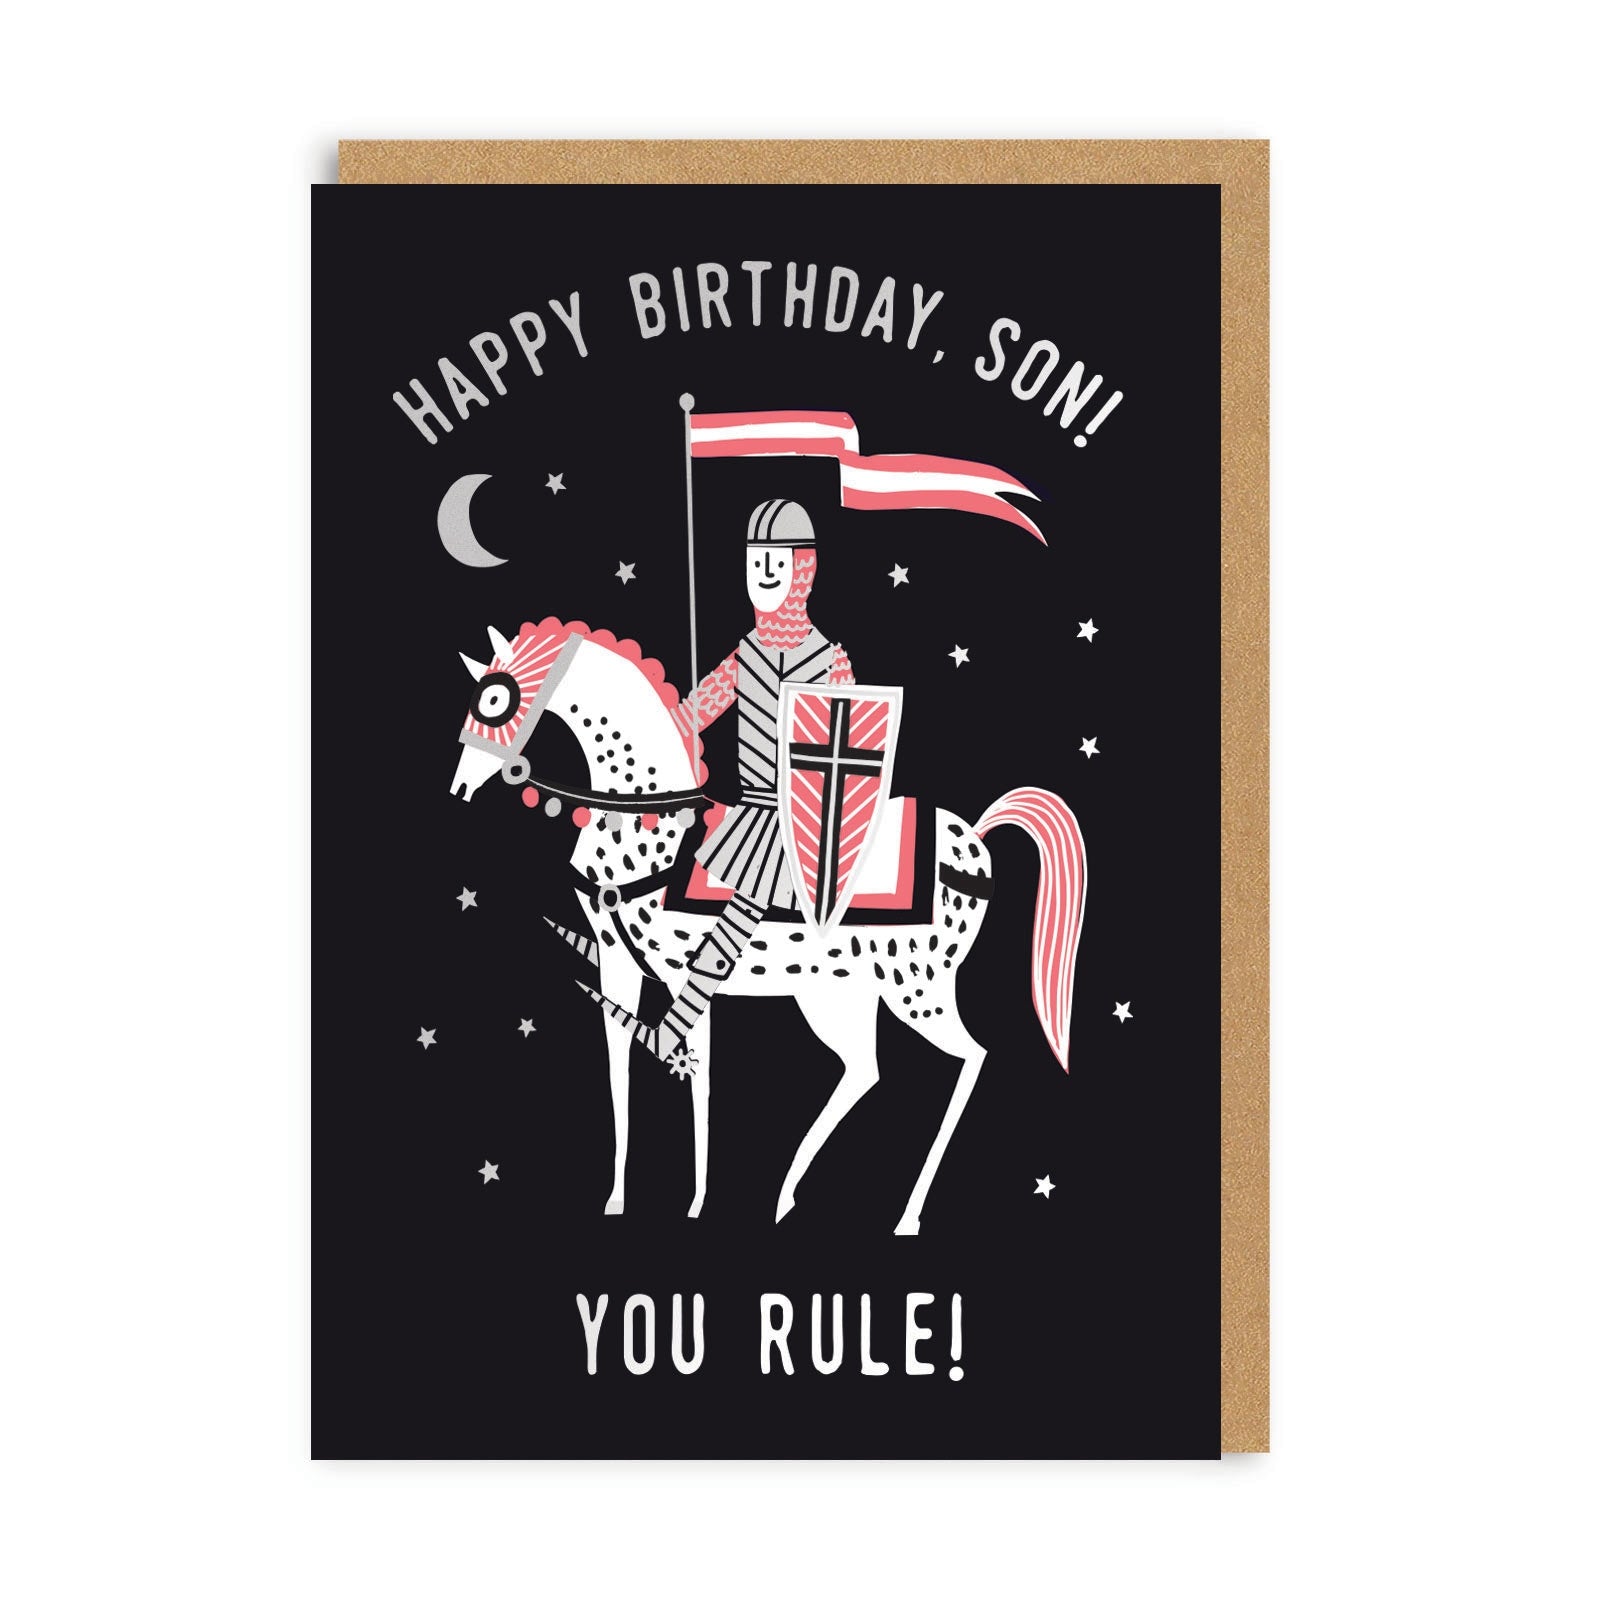 Happy Birthday, Son. You Rule! Greeting Card